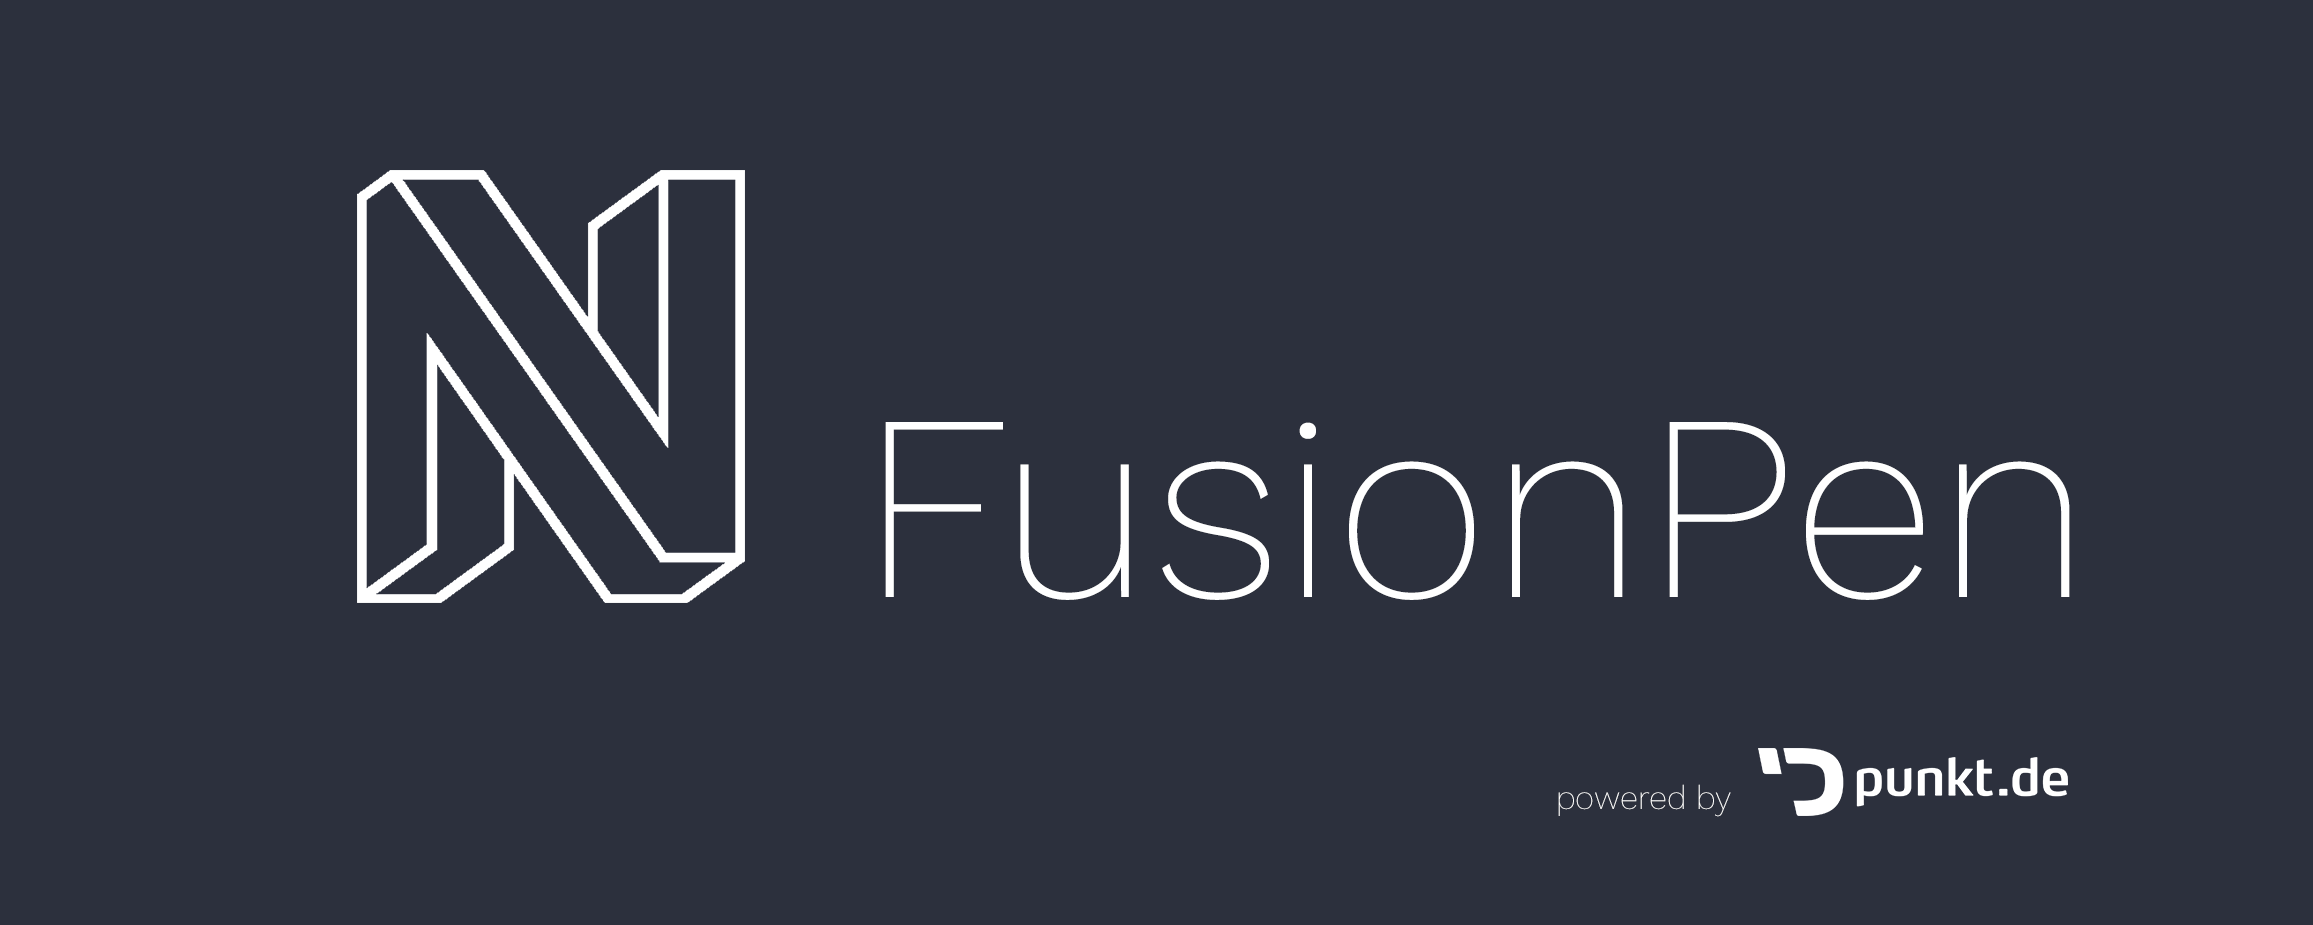 FusionPen - Neos Fusion Code zum Anfassen